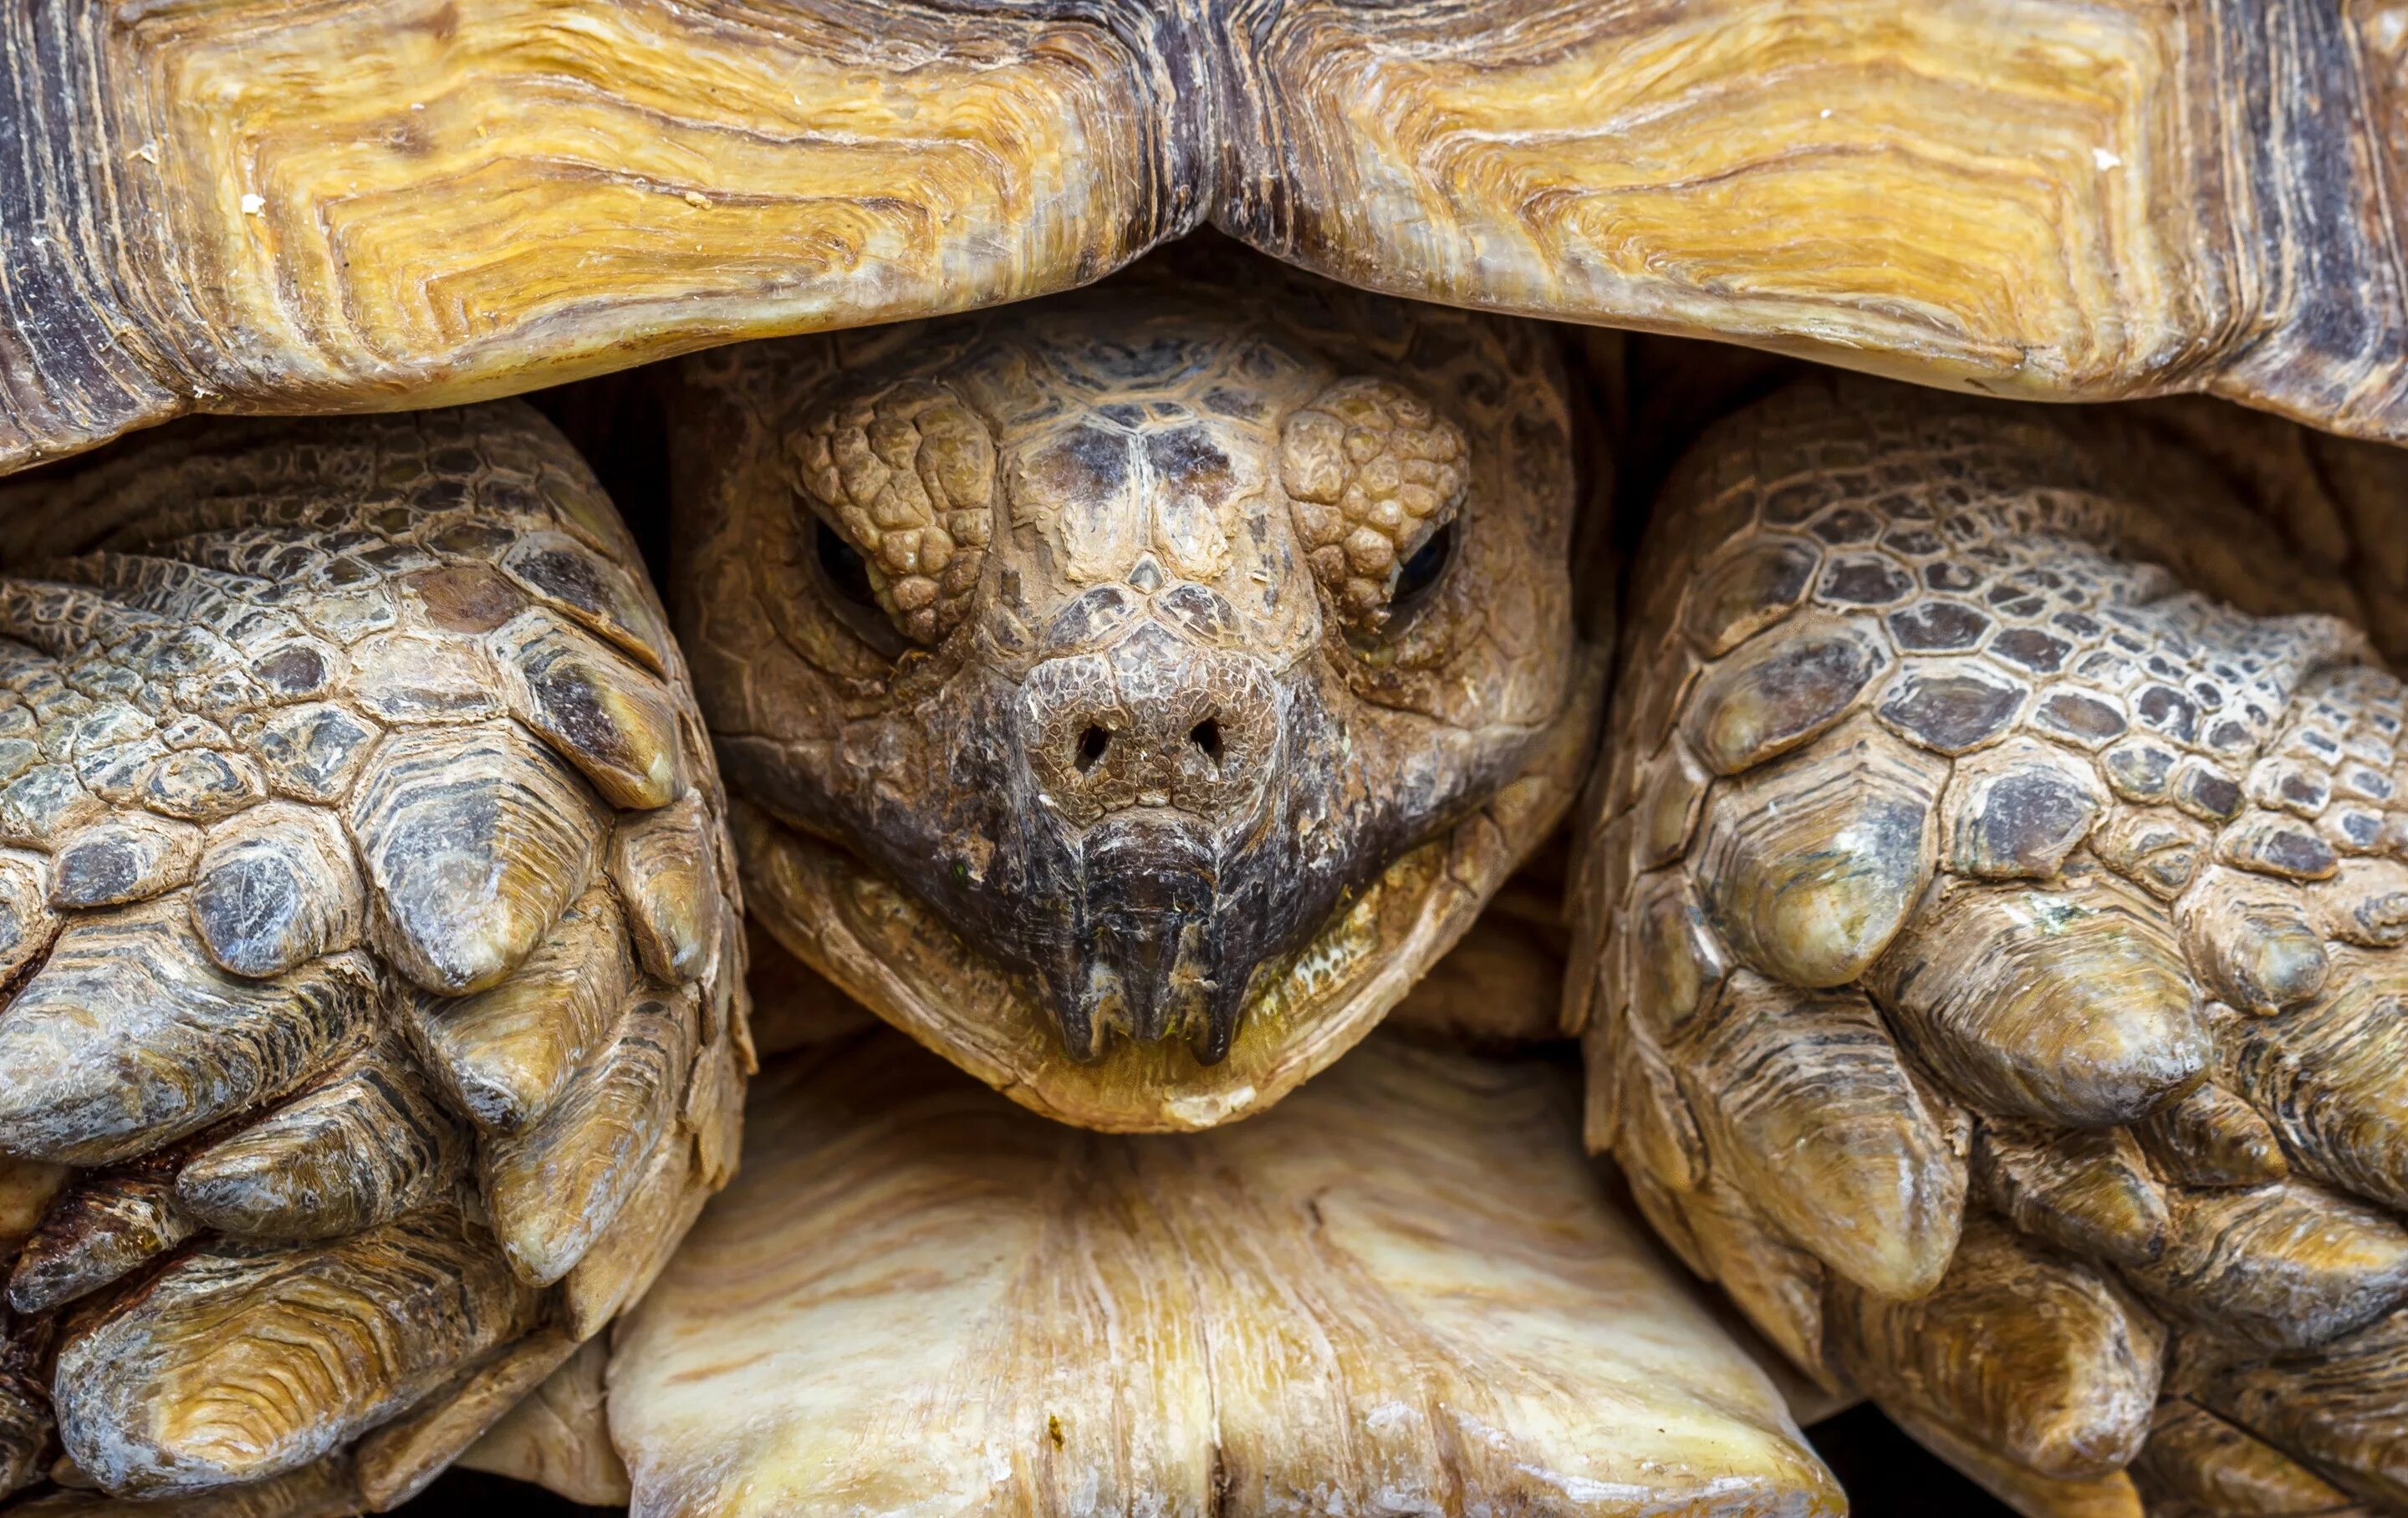 Мадагаскарская клювогрудая черепаха. Среднеазиатская черепаха трехголовые. Среднеазиатская черепаха голова. Черепаховый черепаха.